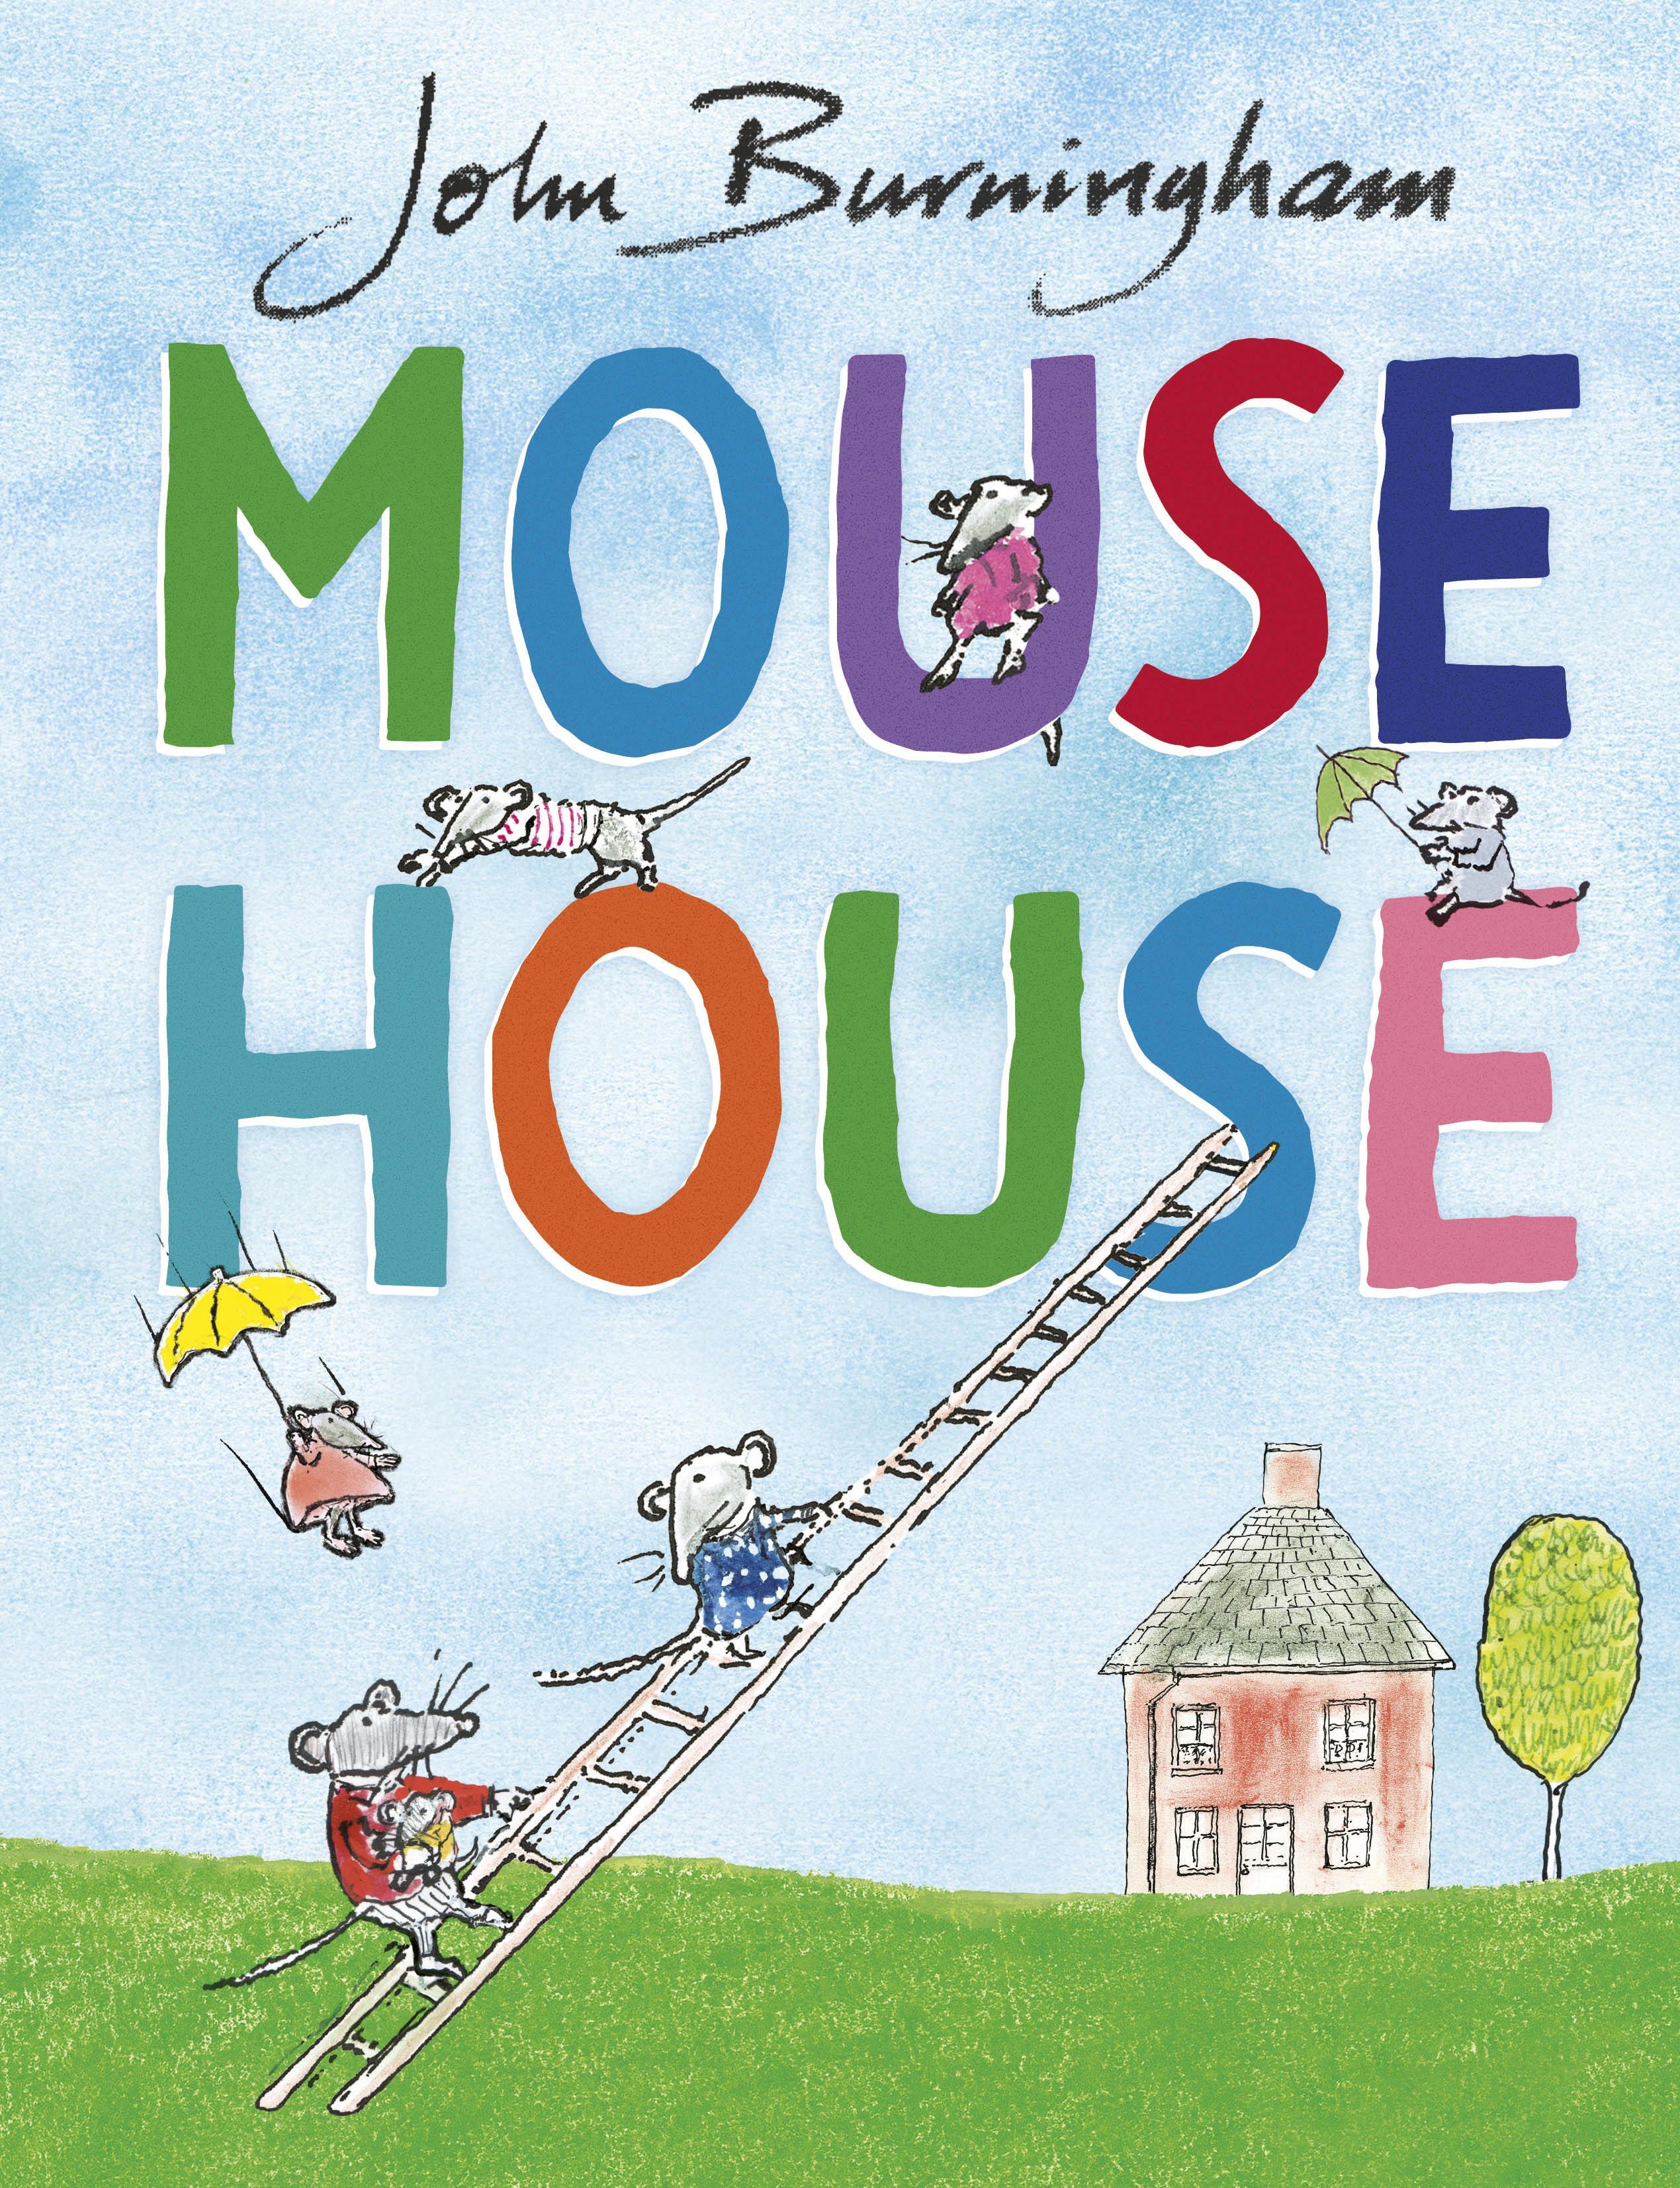 Mouse House - John Burningham